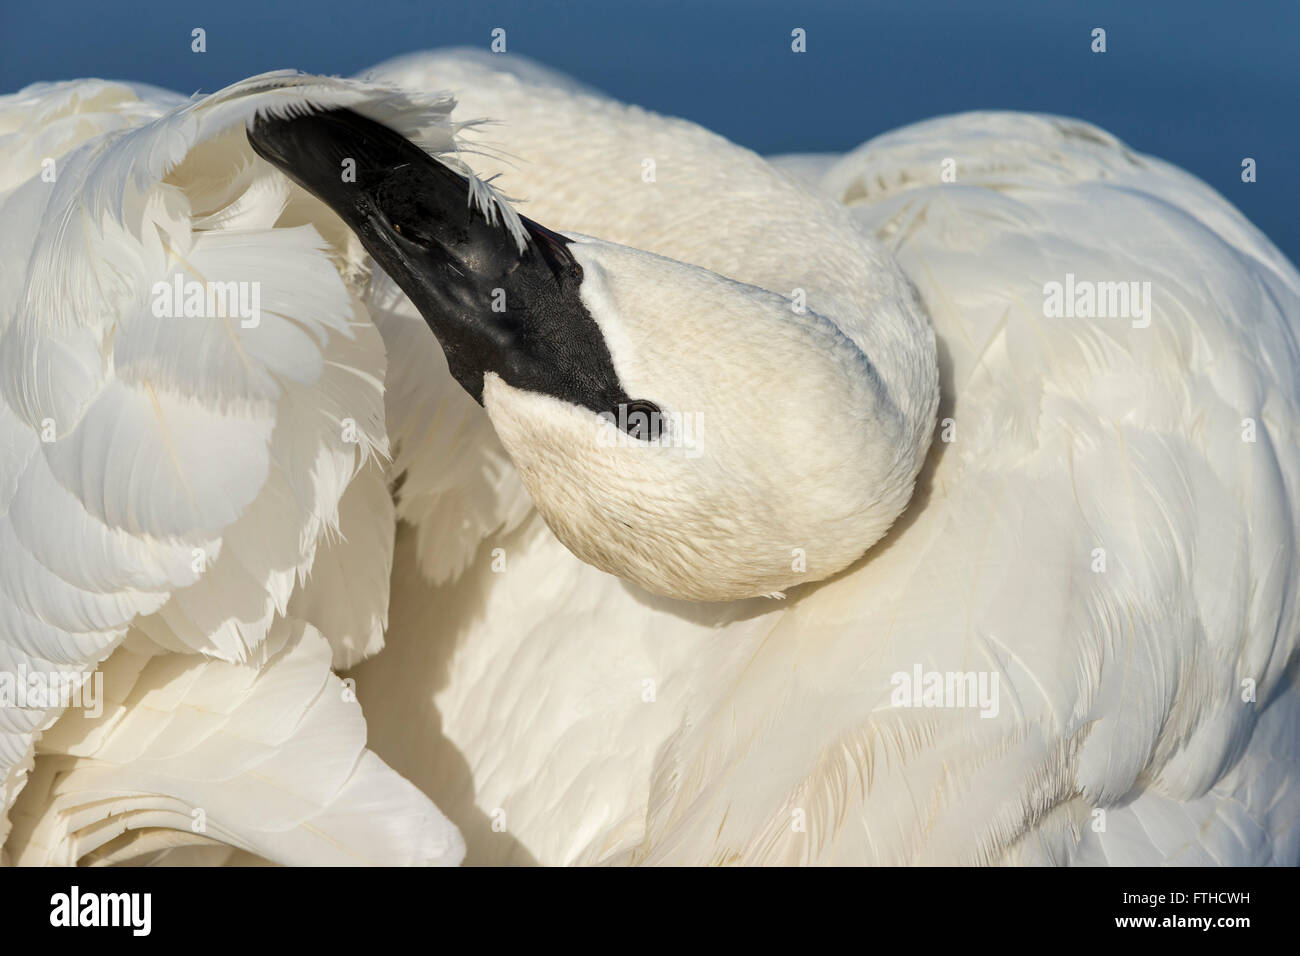 Trumpeter swan preening feathers at edge of Esquimalt Lagoon-Victoria, British Columbia, Canada. Stock Photo